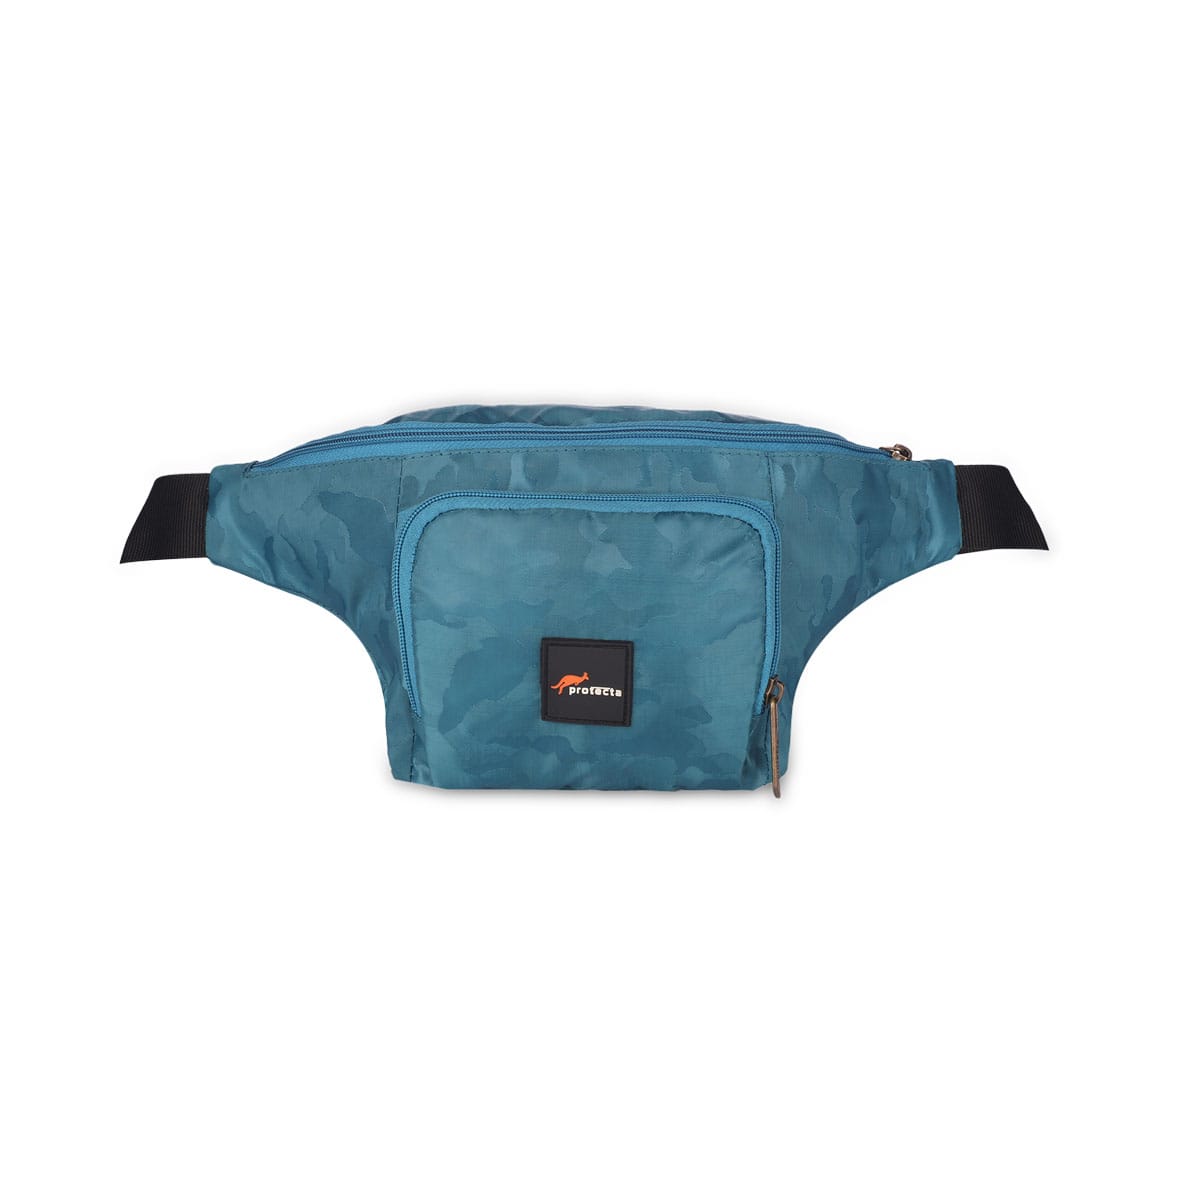 SS Players Duffle Cricket Kit Bag (6 Bat Sleeve) – Sports Wing | Shop on